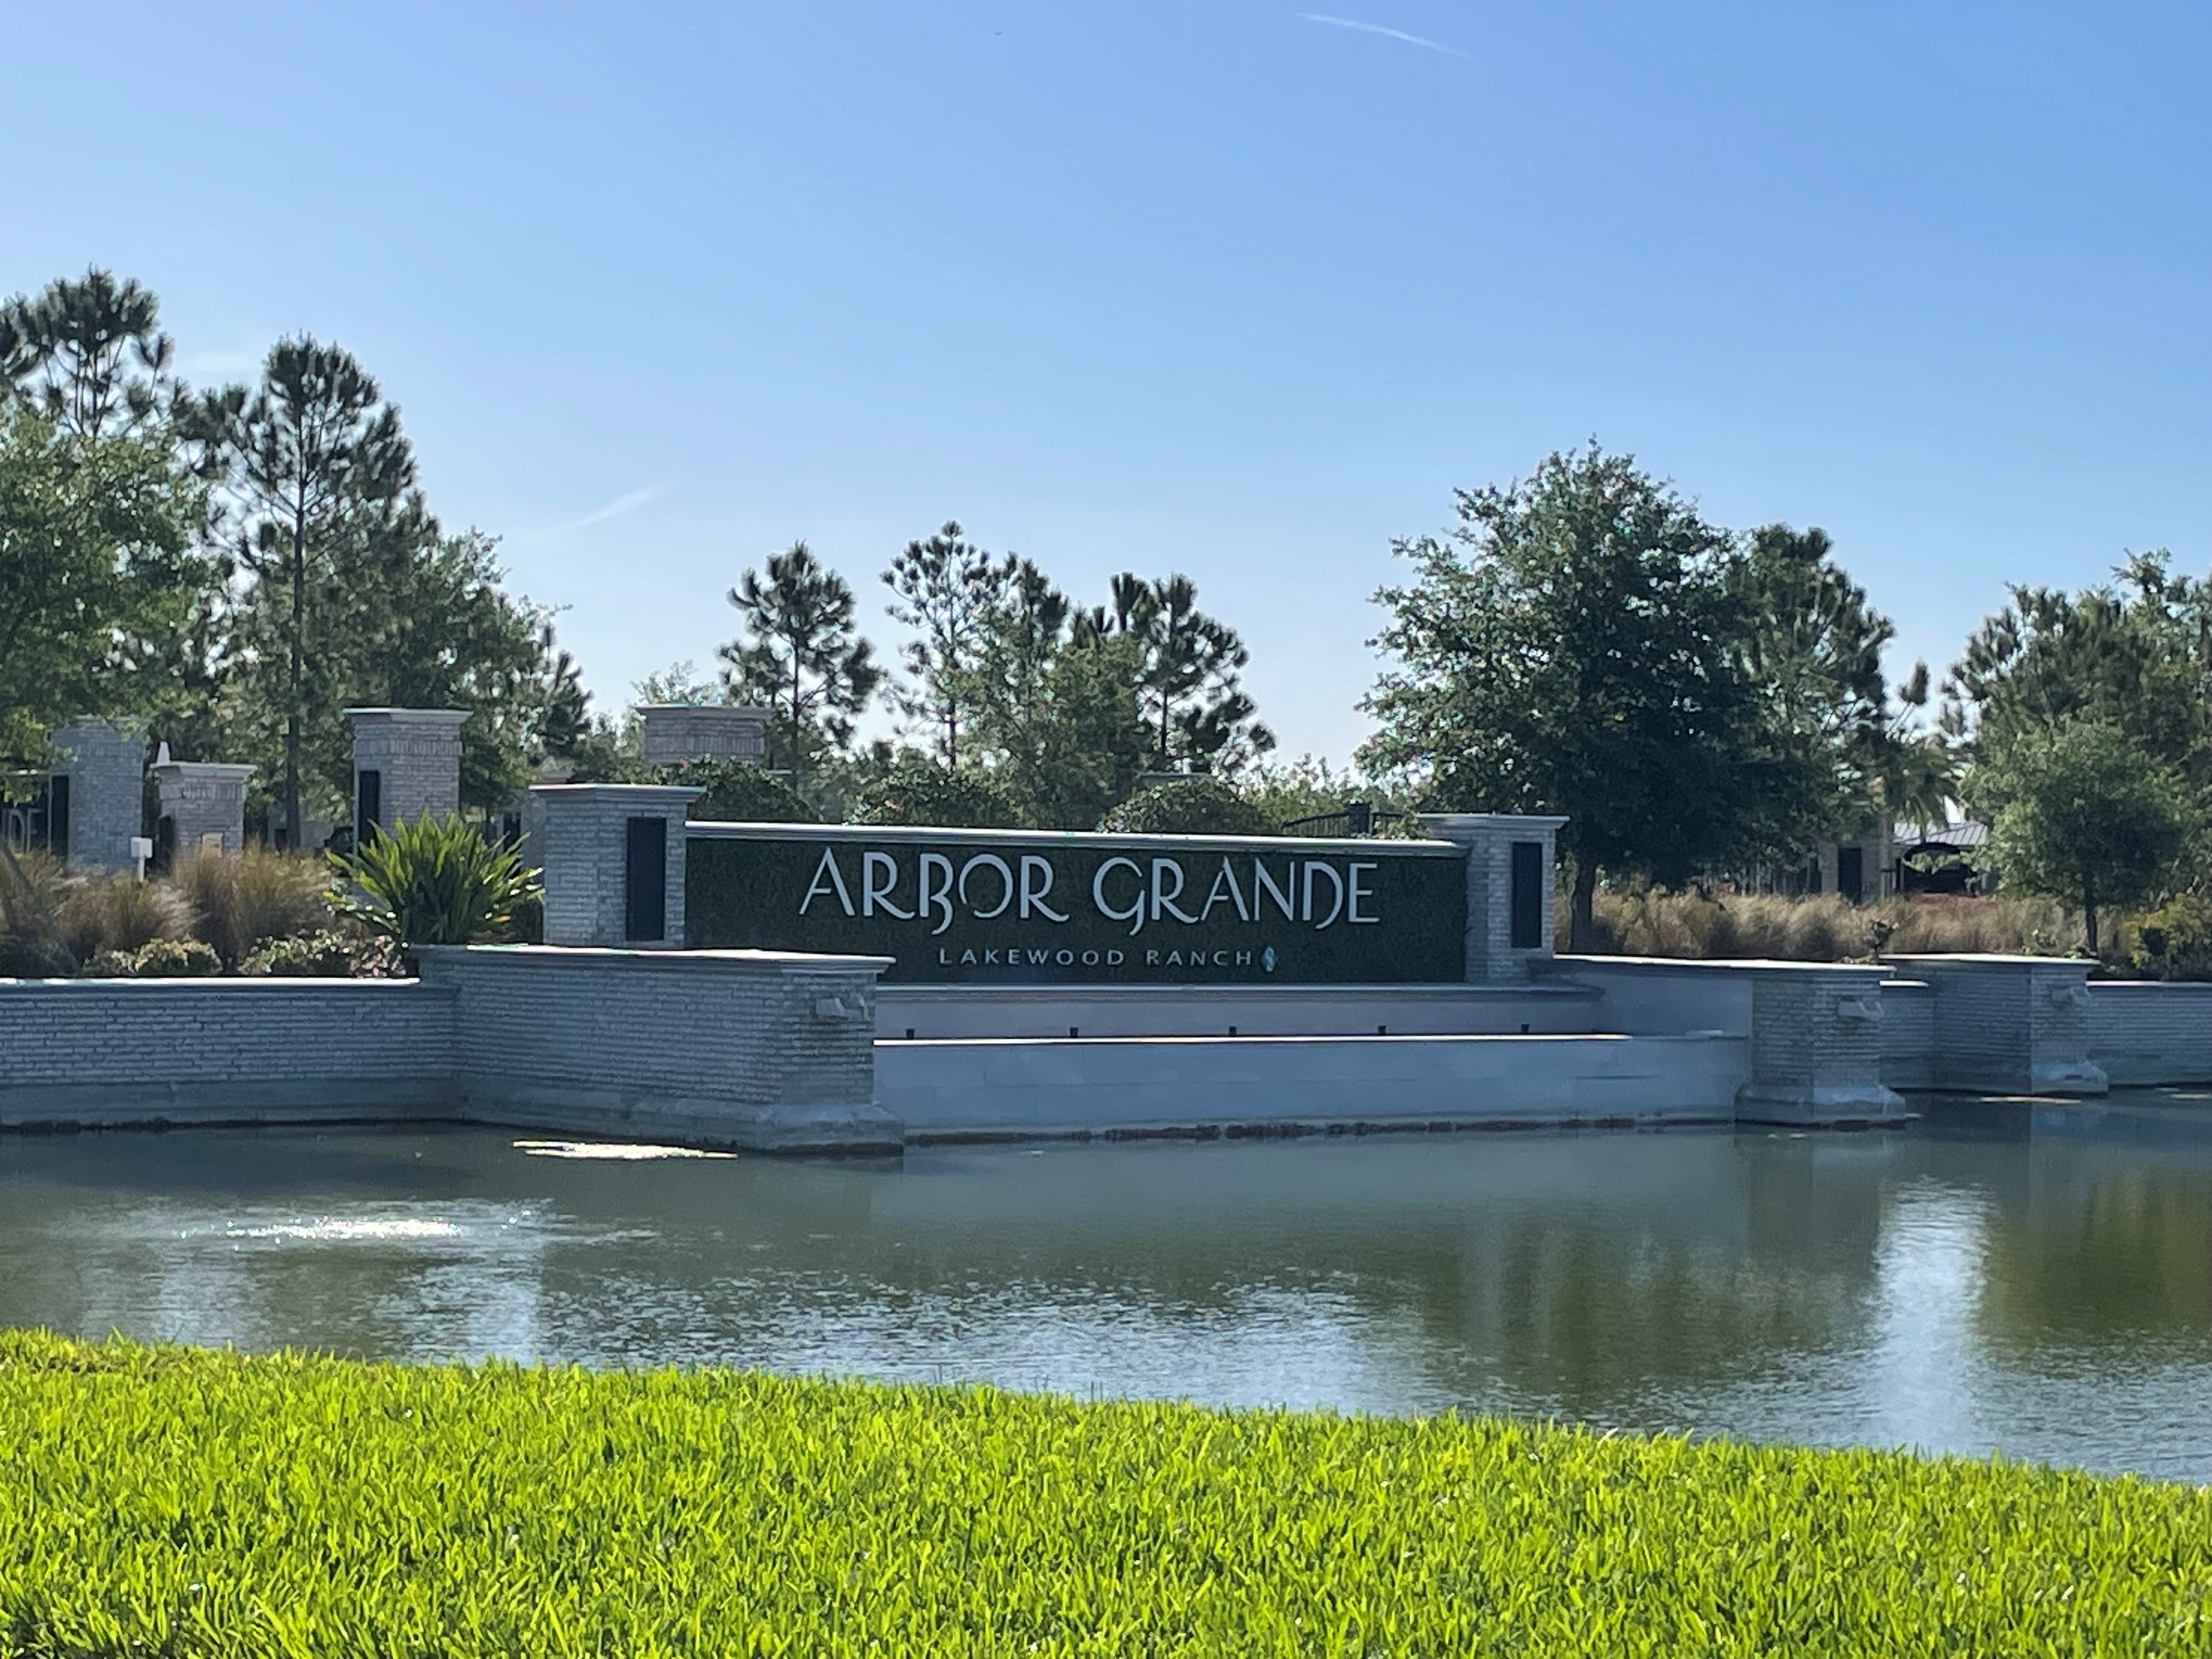 Arbor Grande in Lakewood Ranch